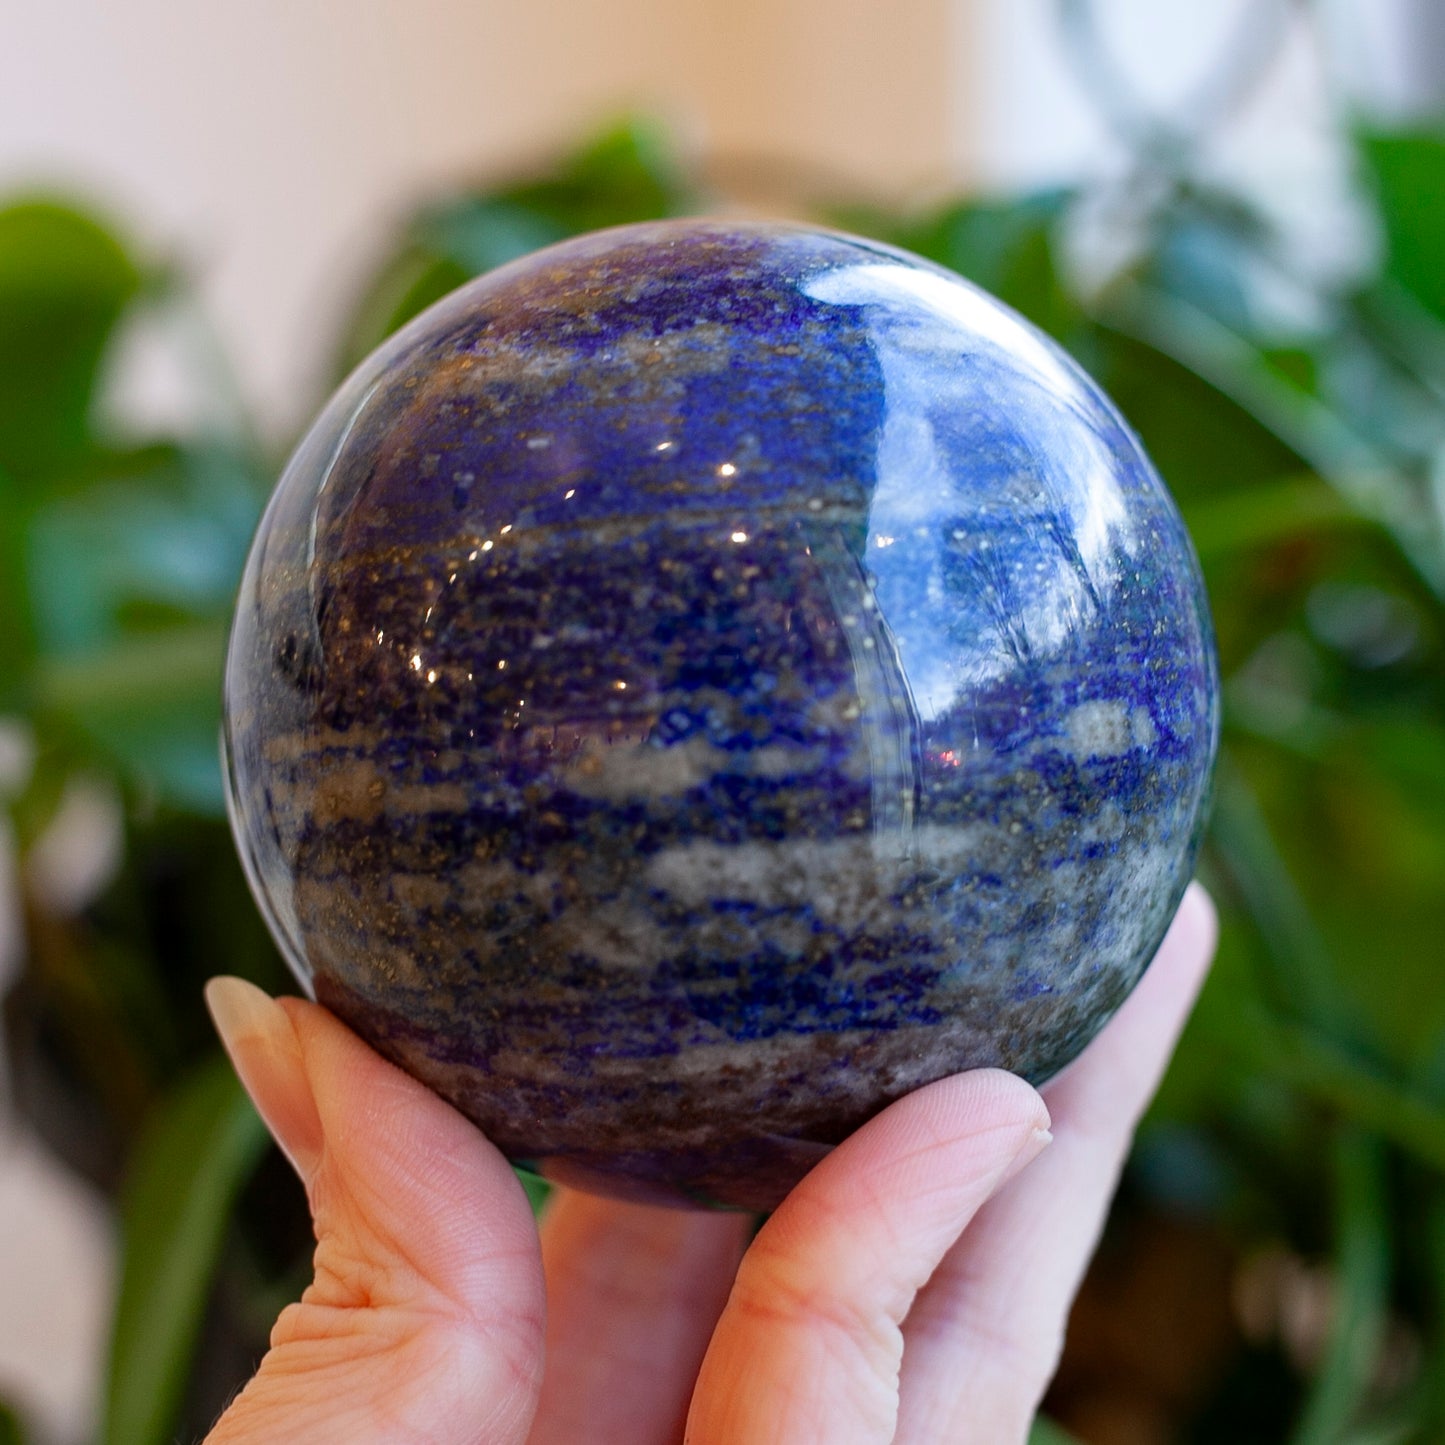 Lapis Lazuli Sphere, 75mm